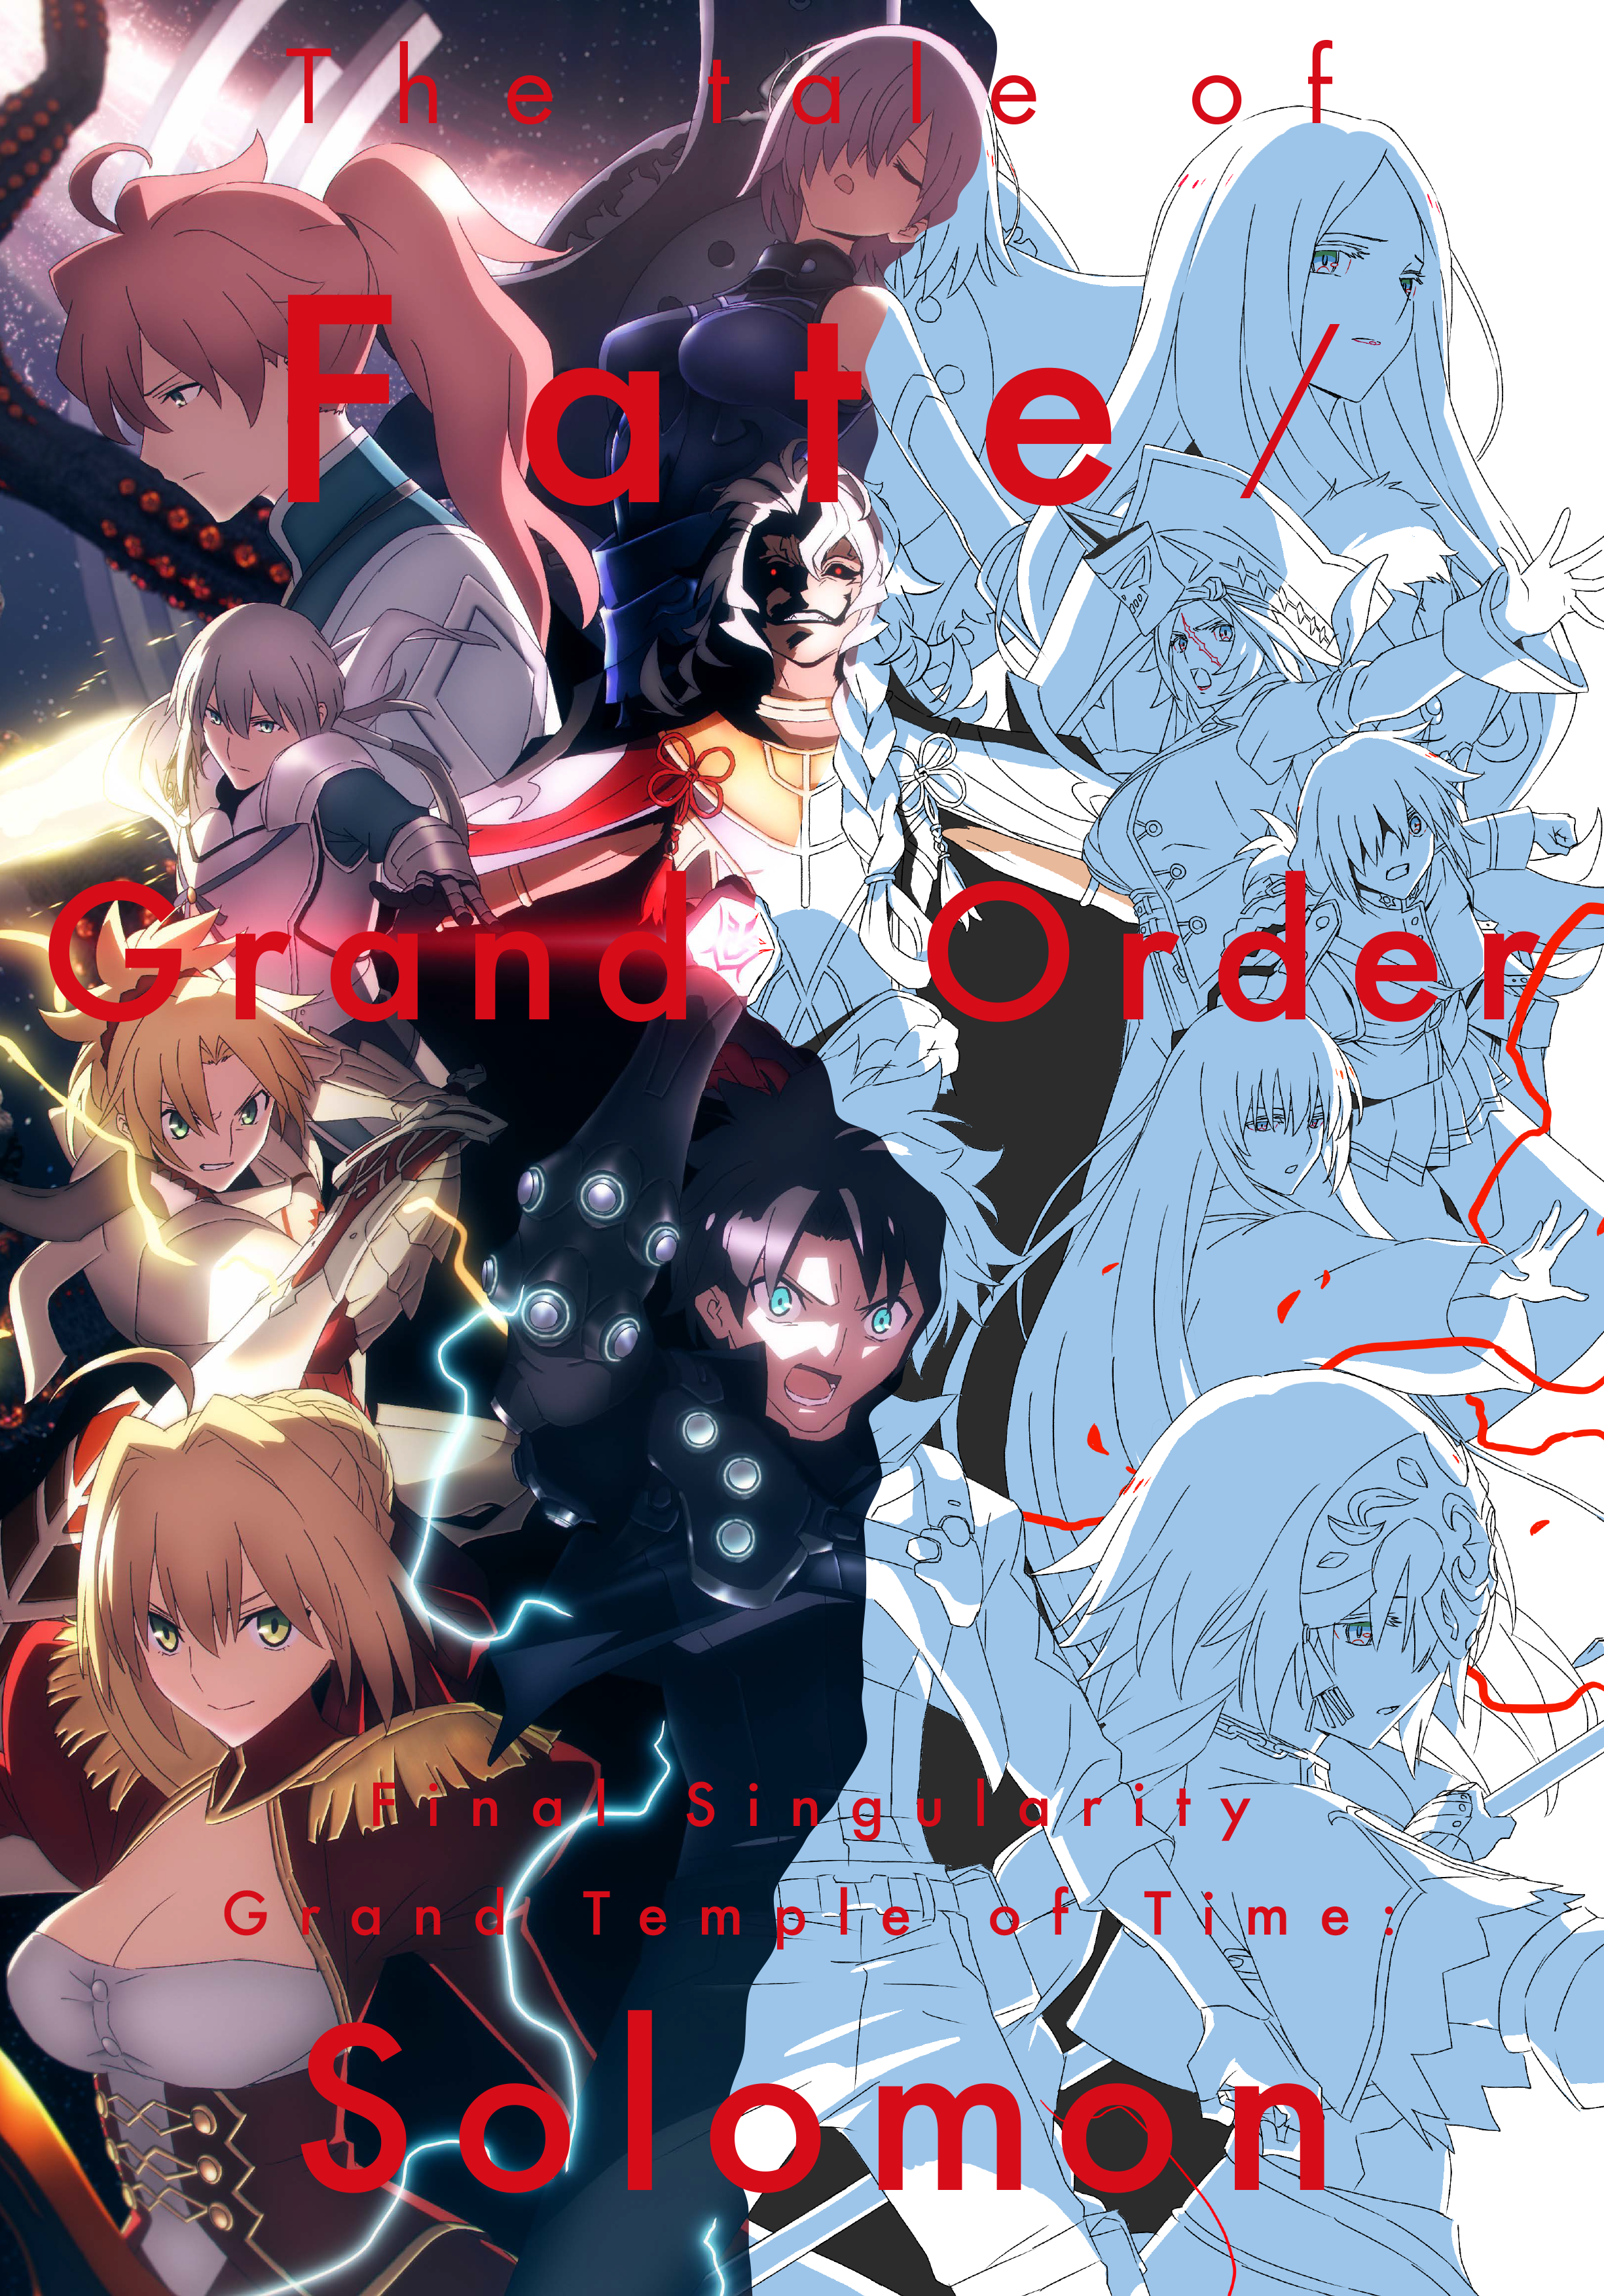 Mash & Fou Key Star in New Fate/Grand Order Anime Visual!, Anime News